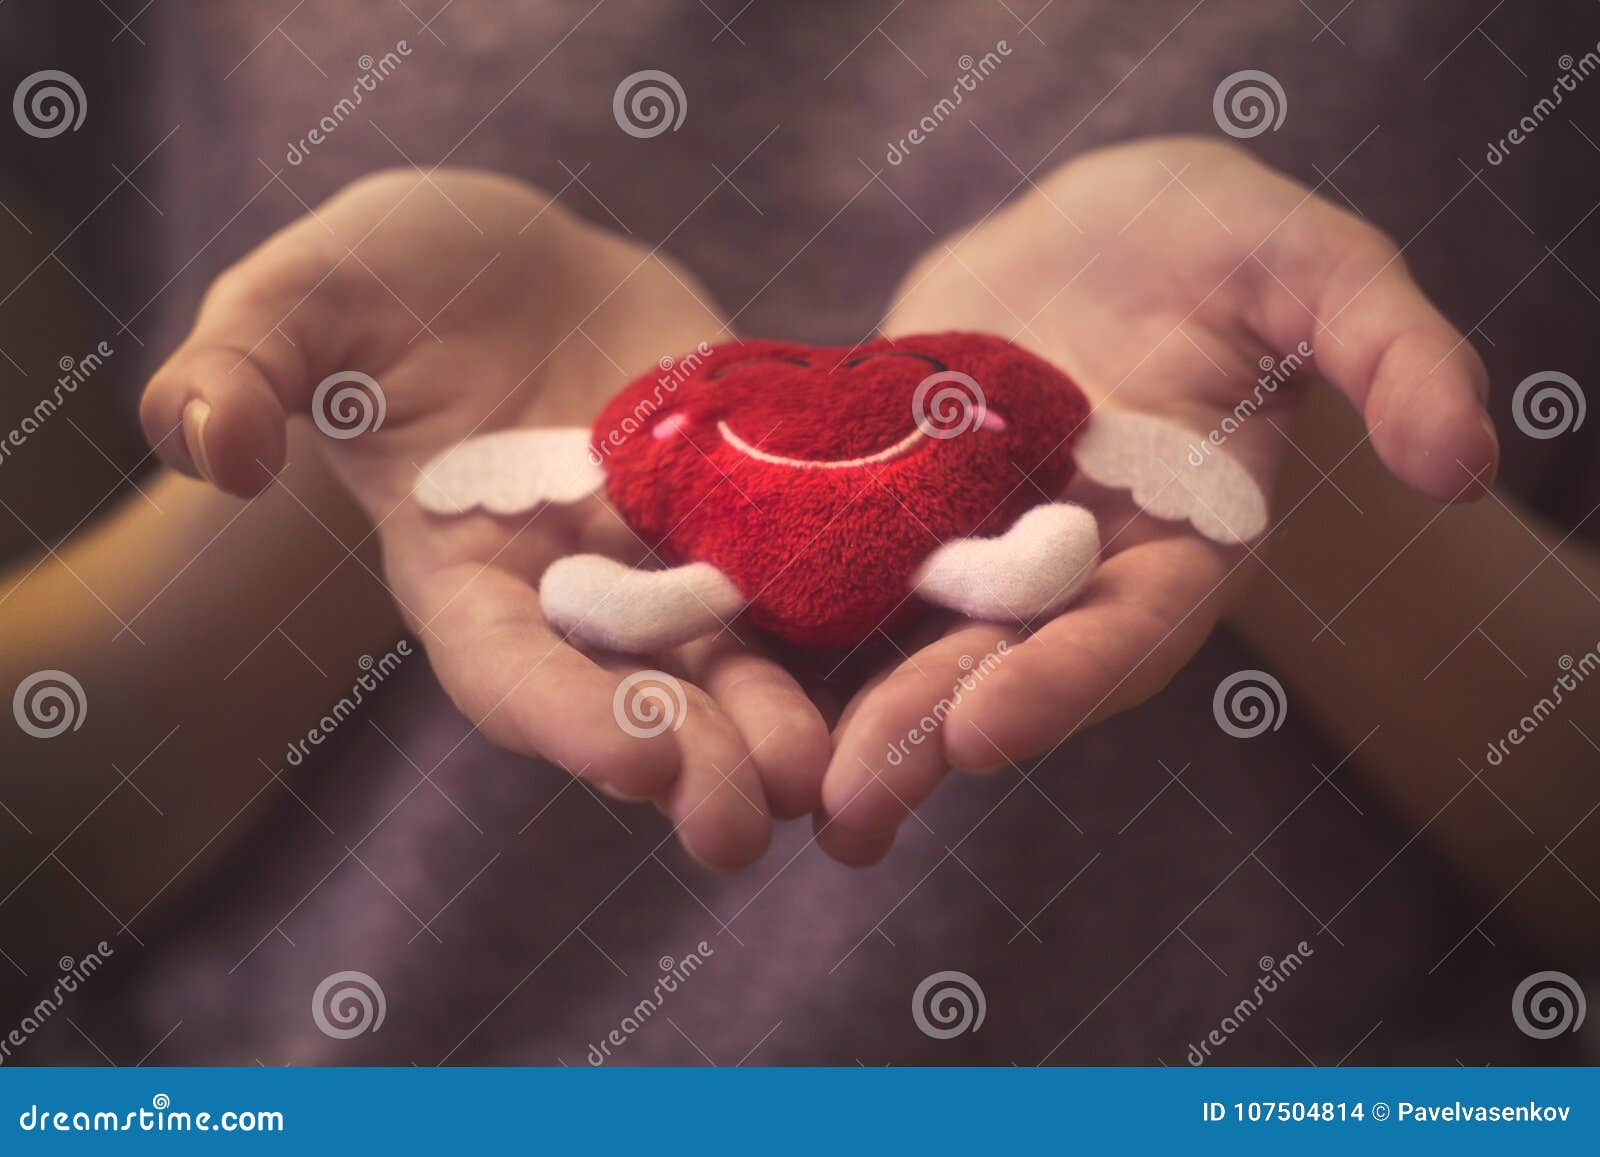 Сердце не игрушка слезы на подушке. Сердце не игрушка. Моё сердце не игрушка. Assamuel сердце не игрушка. Сердце не игрушка обложка.